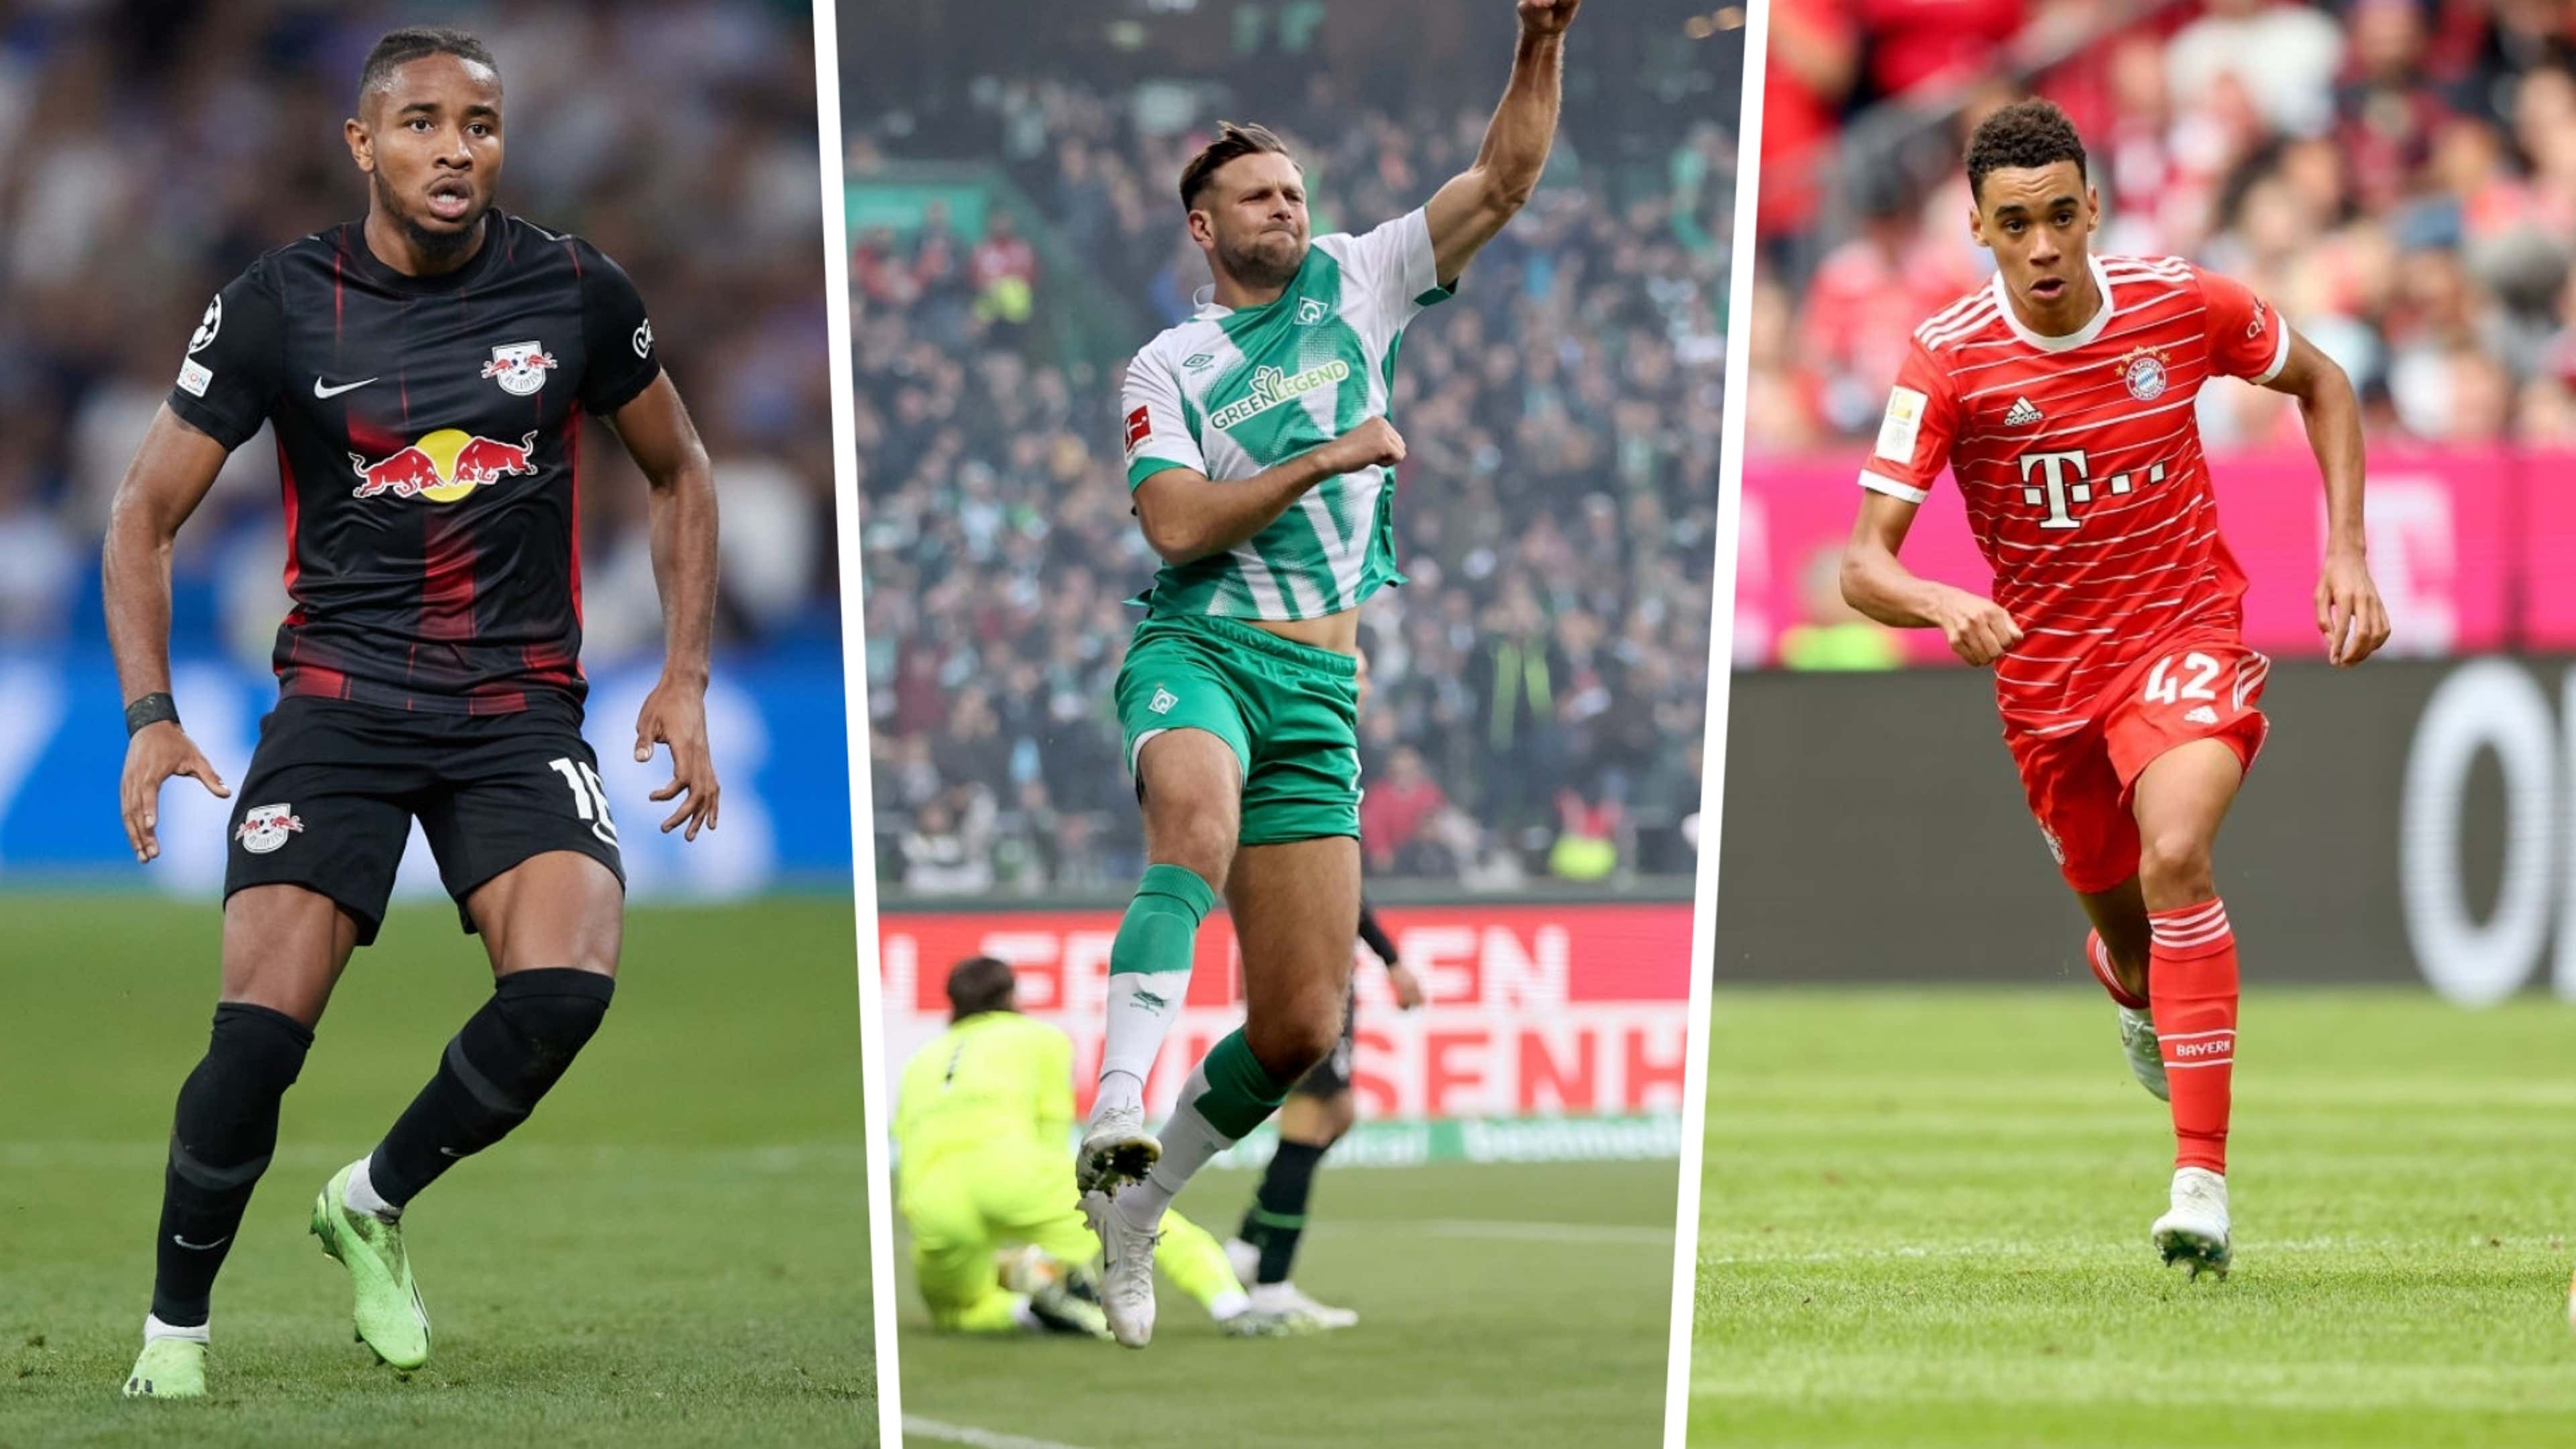 Bundesliga top scorers 2022-23: Fullkrug, Nkunku, and Musiala lead goal  scoring charts